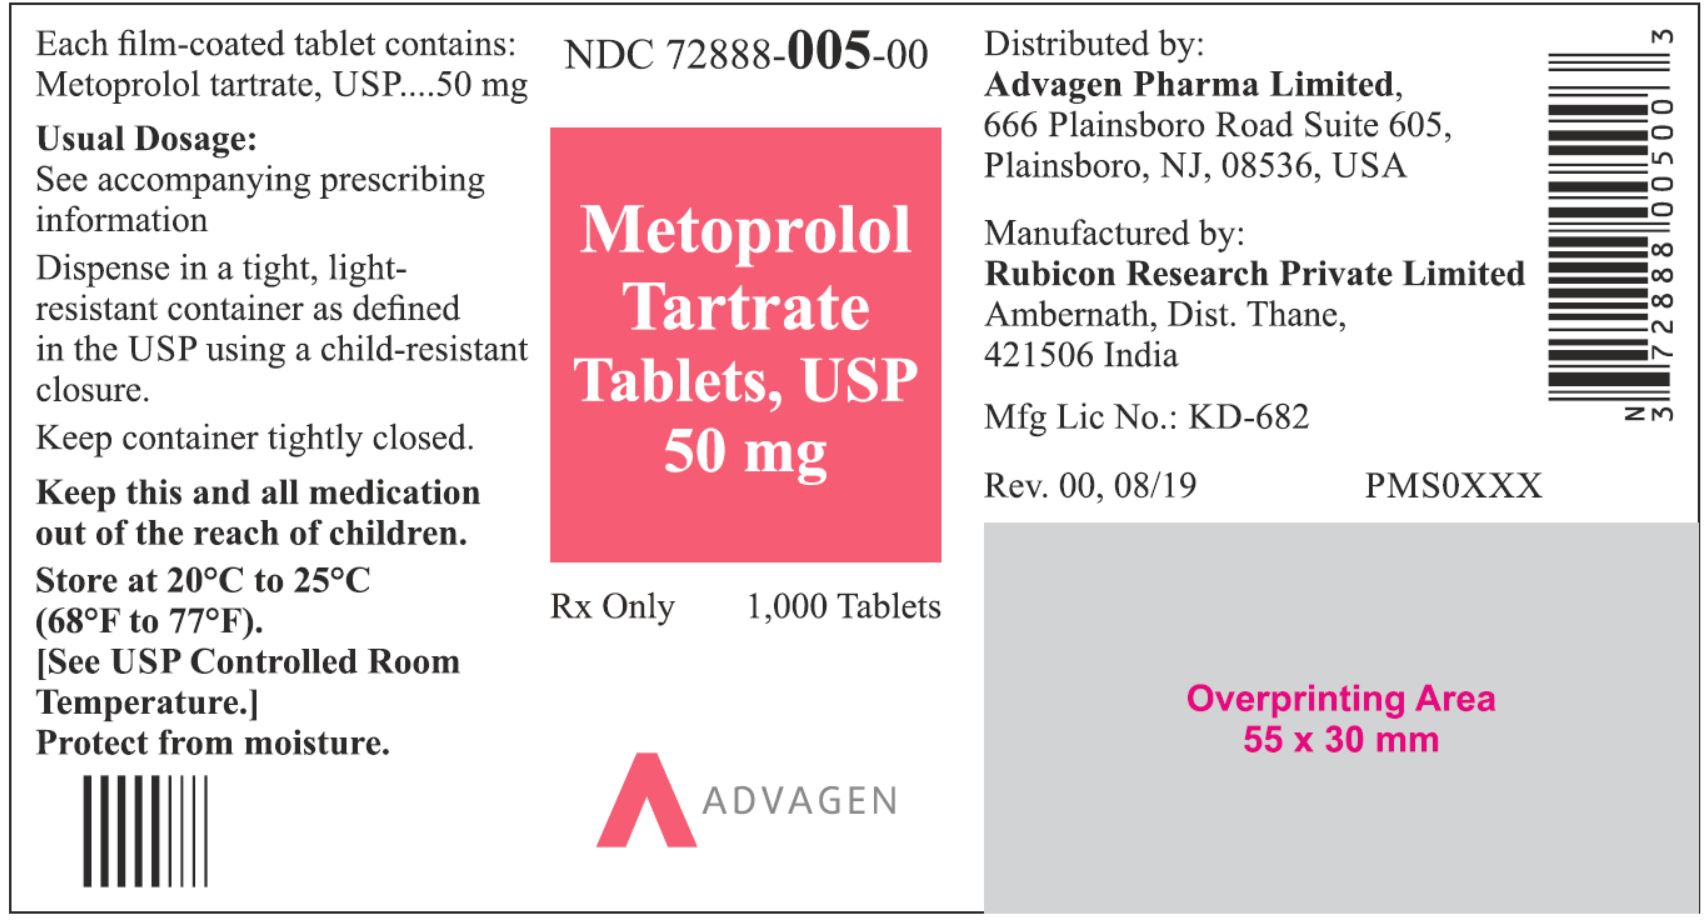 NDC 72888-005-00 - Metoprolol Tartrate Tablets, USP 50 mg - 1000 Tablets